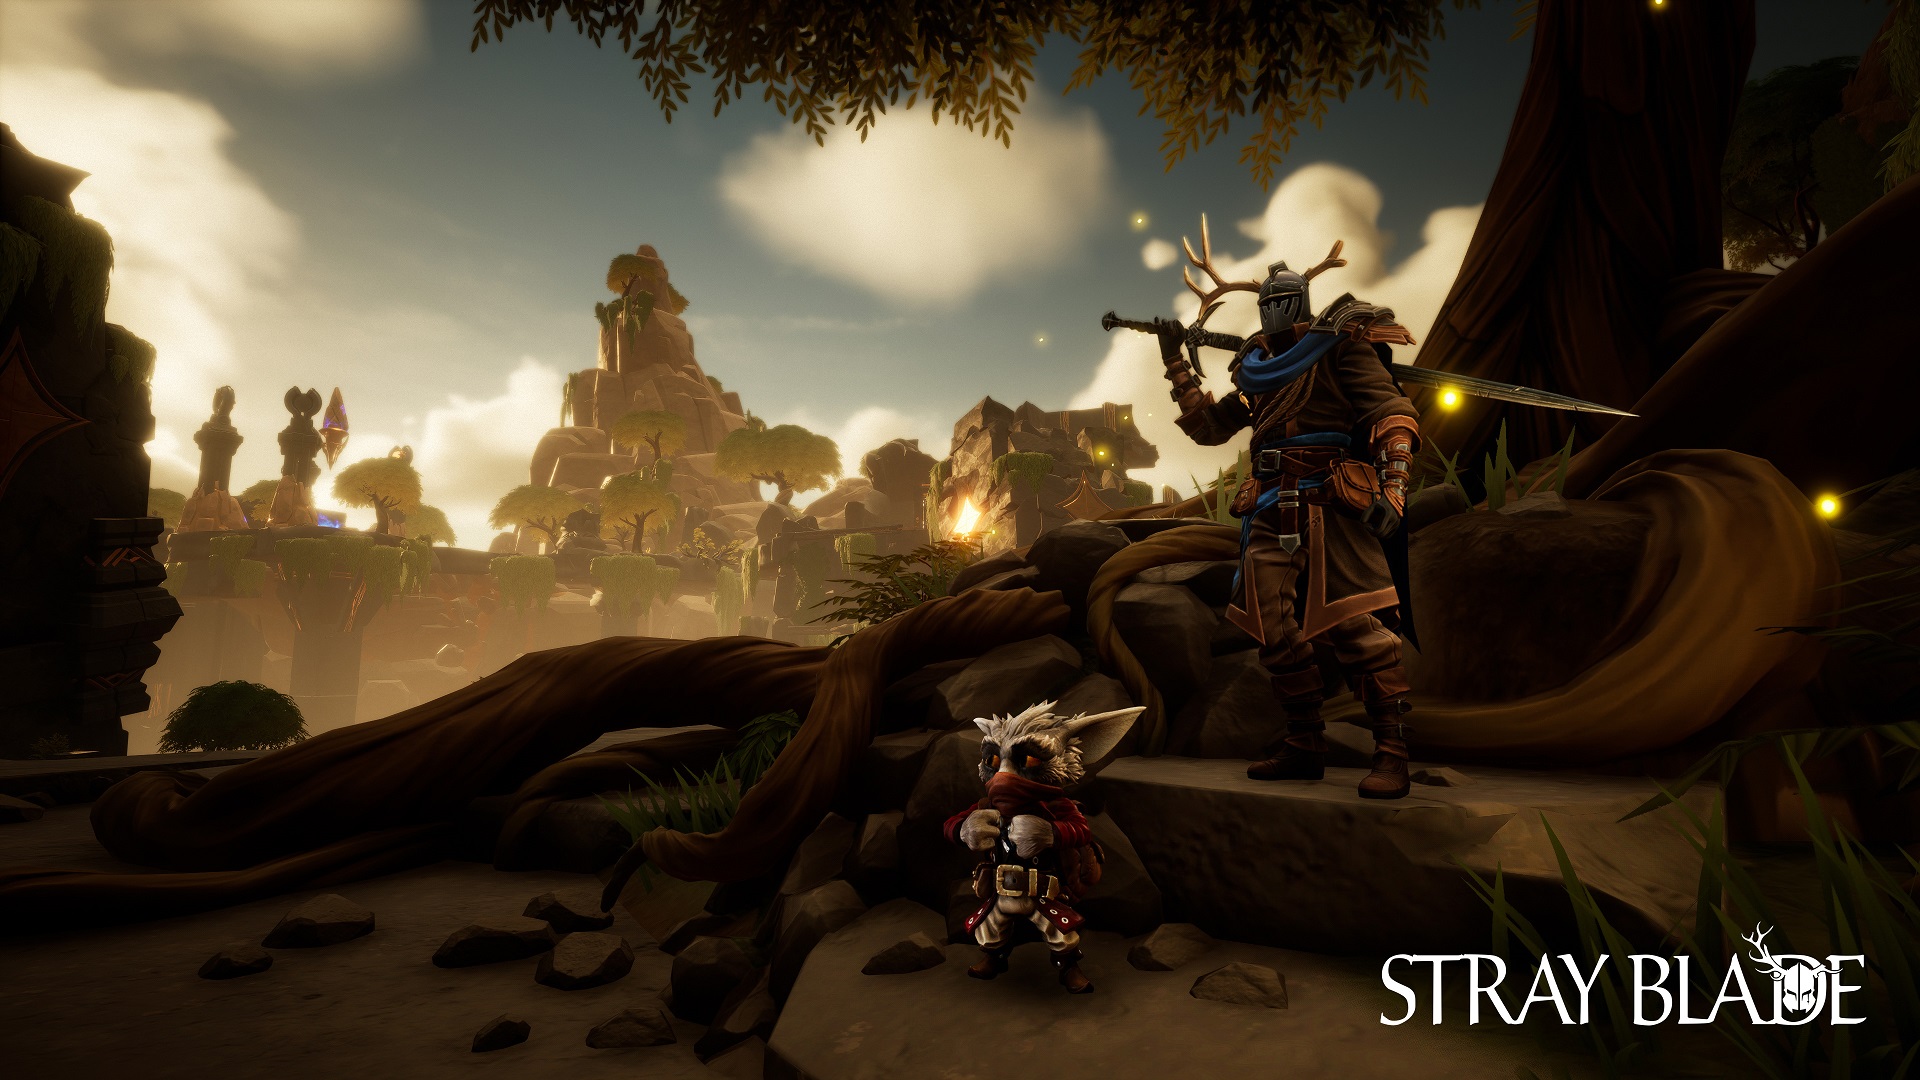 gamescom 2021: Stray Blade Coming to Xbox Series X